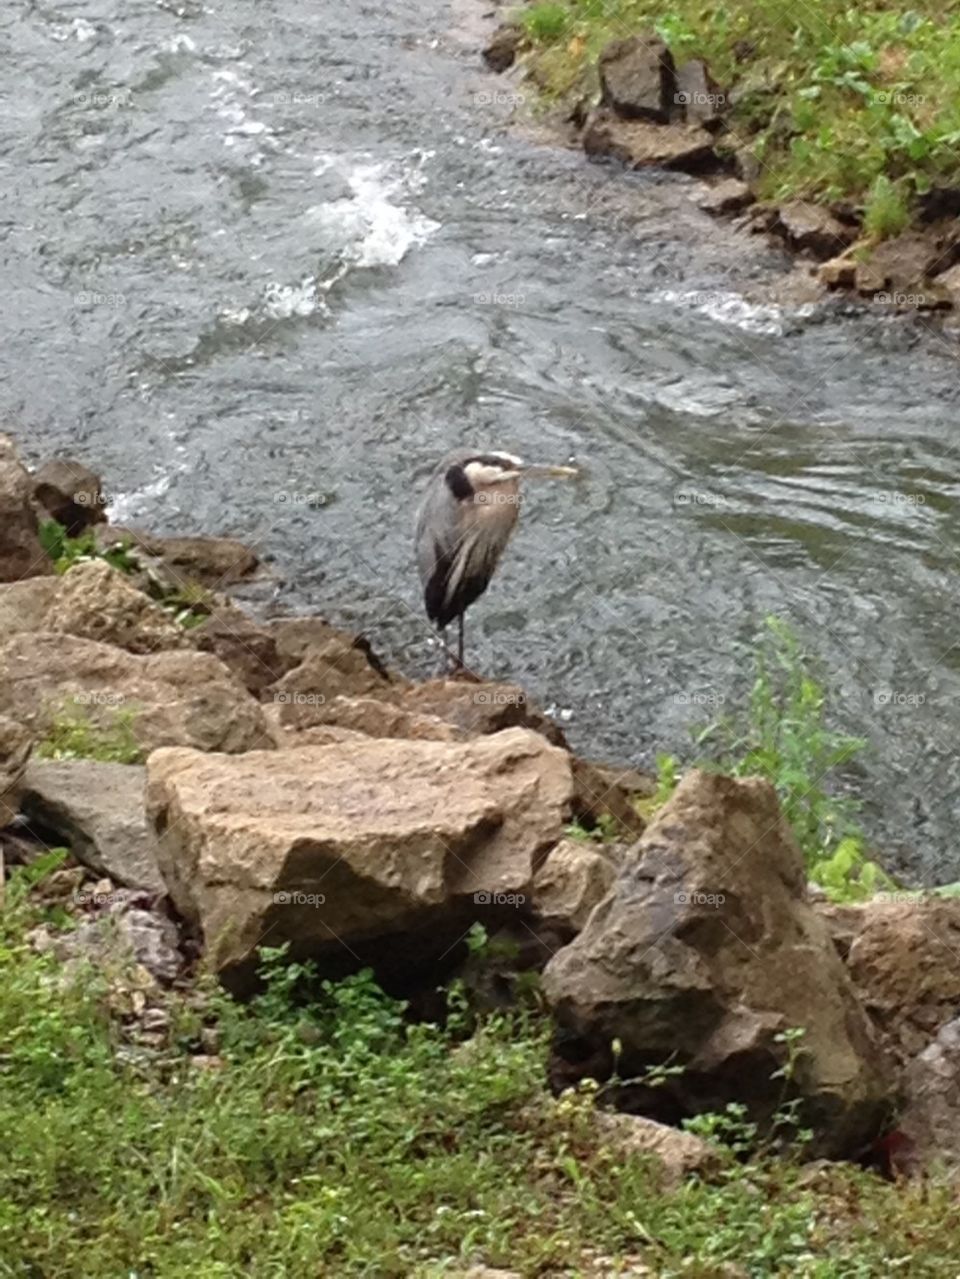 Crane on the river